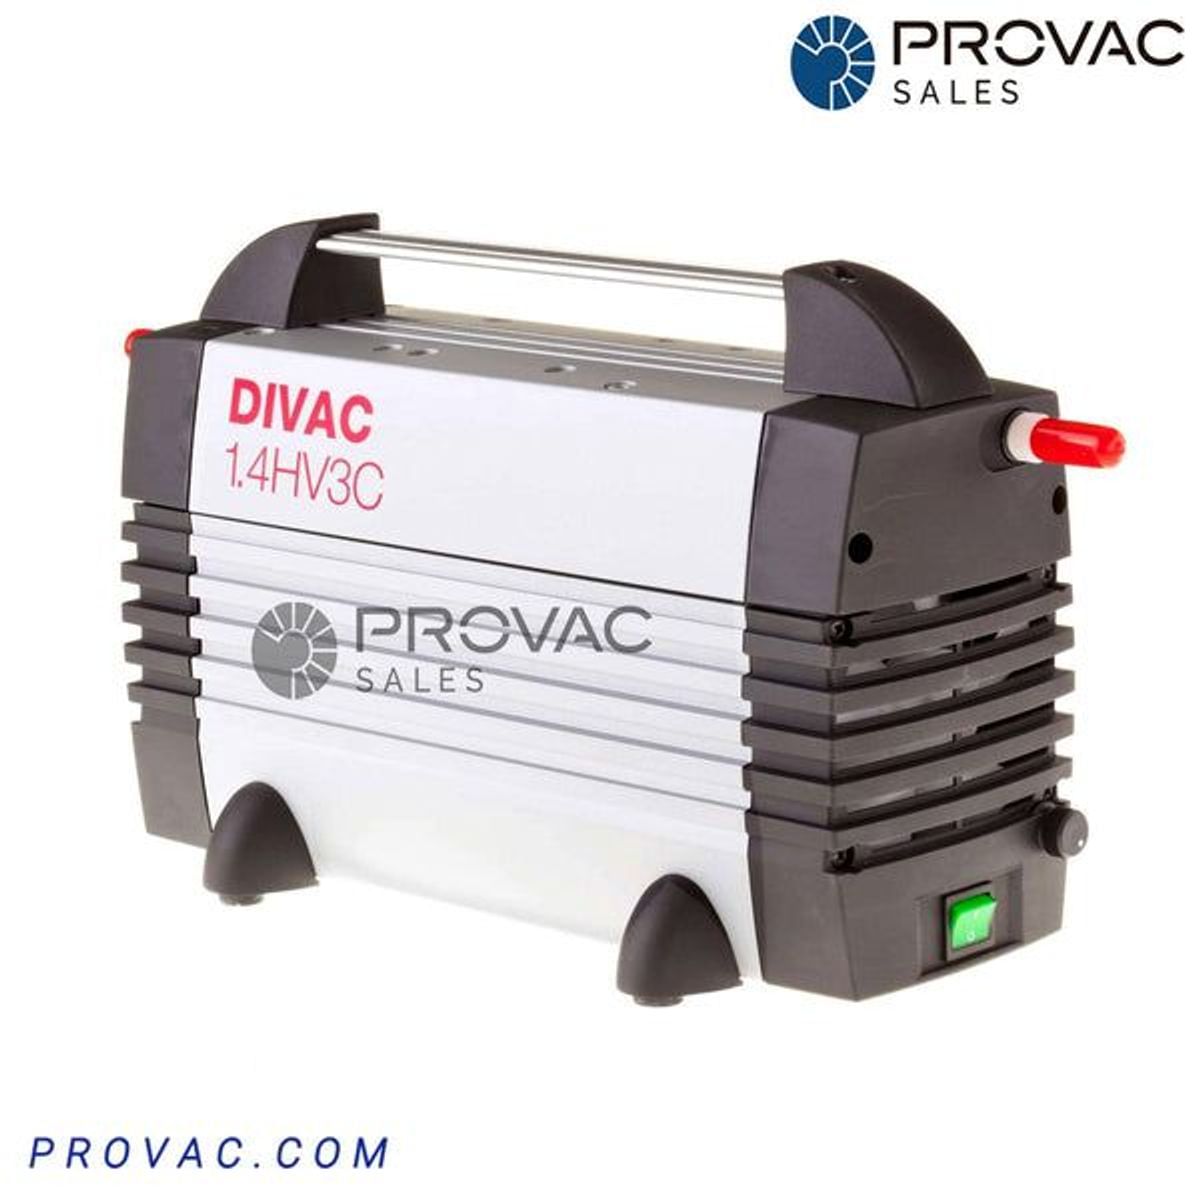 Leybold Divac 1.4HV3C Dry Diaphragm Pump Image 1